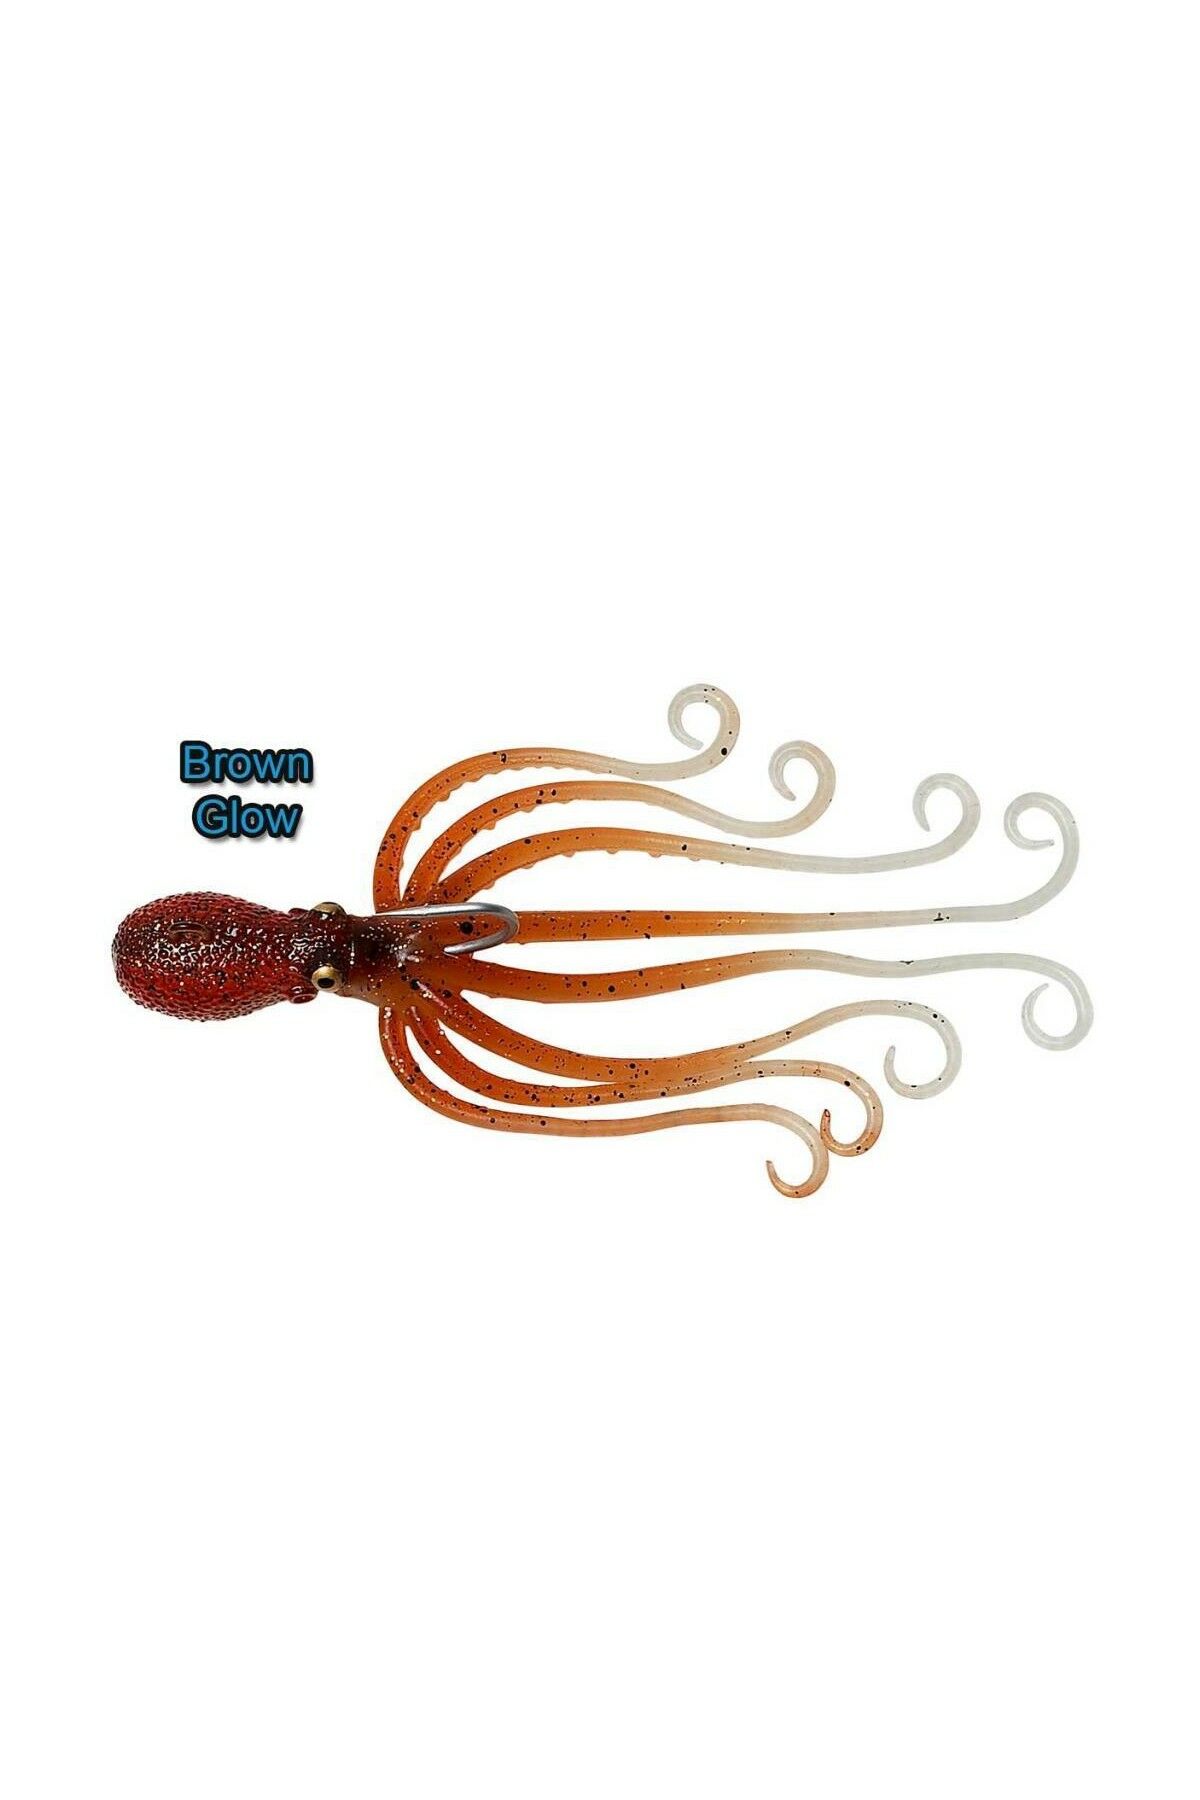 Savage Gear Octopus 35 Gr 10 Cm Suni Yem Brown Glow